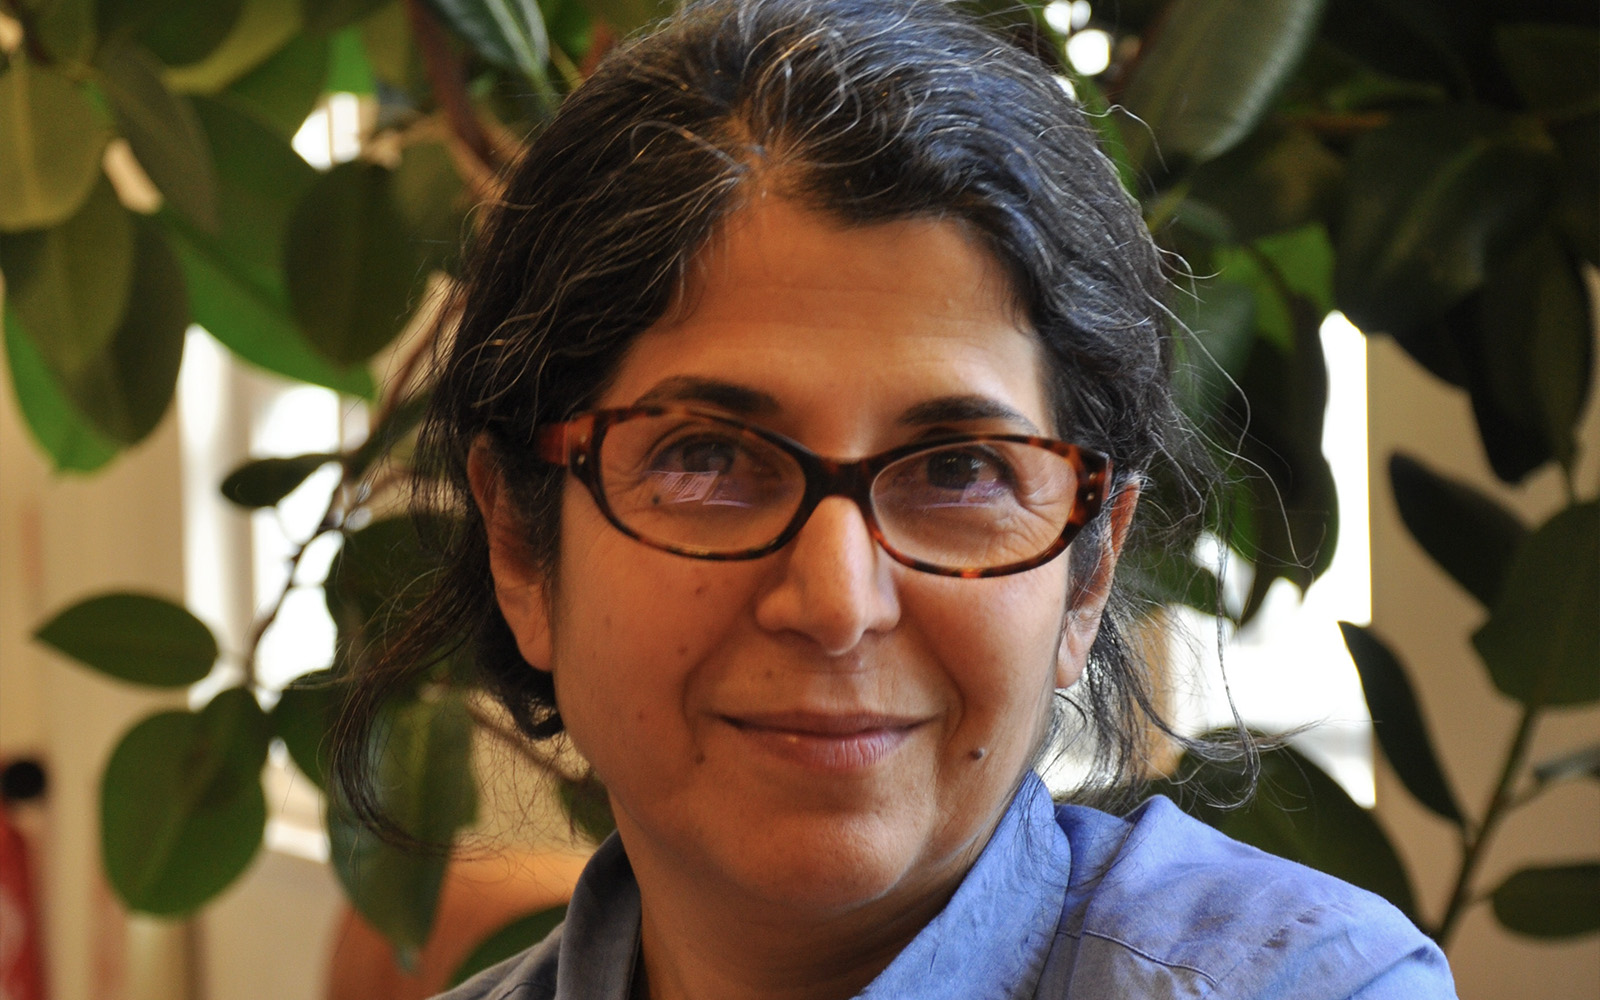 La chercheuse franco-iranienne Fariba Adelkhah est enfin sortie de prison